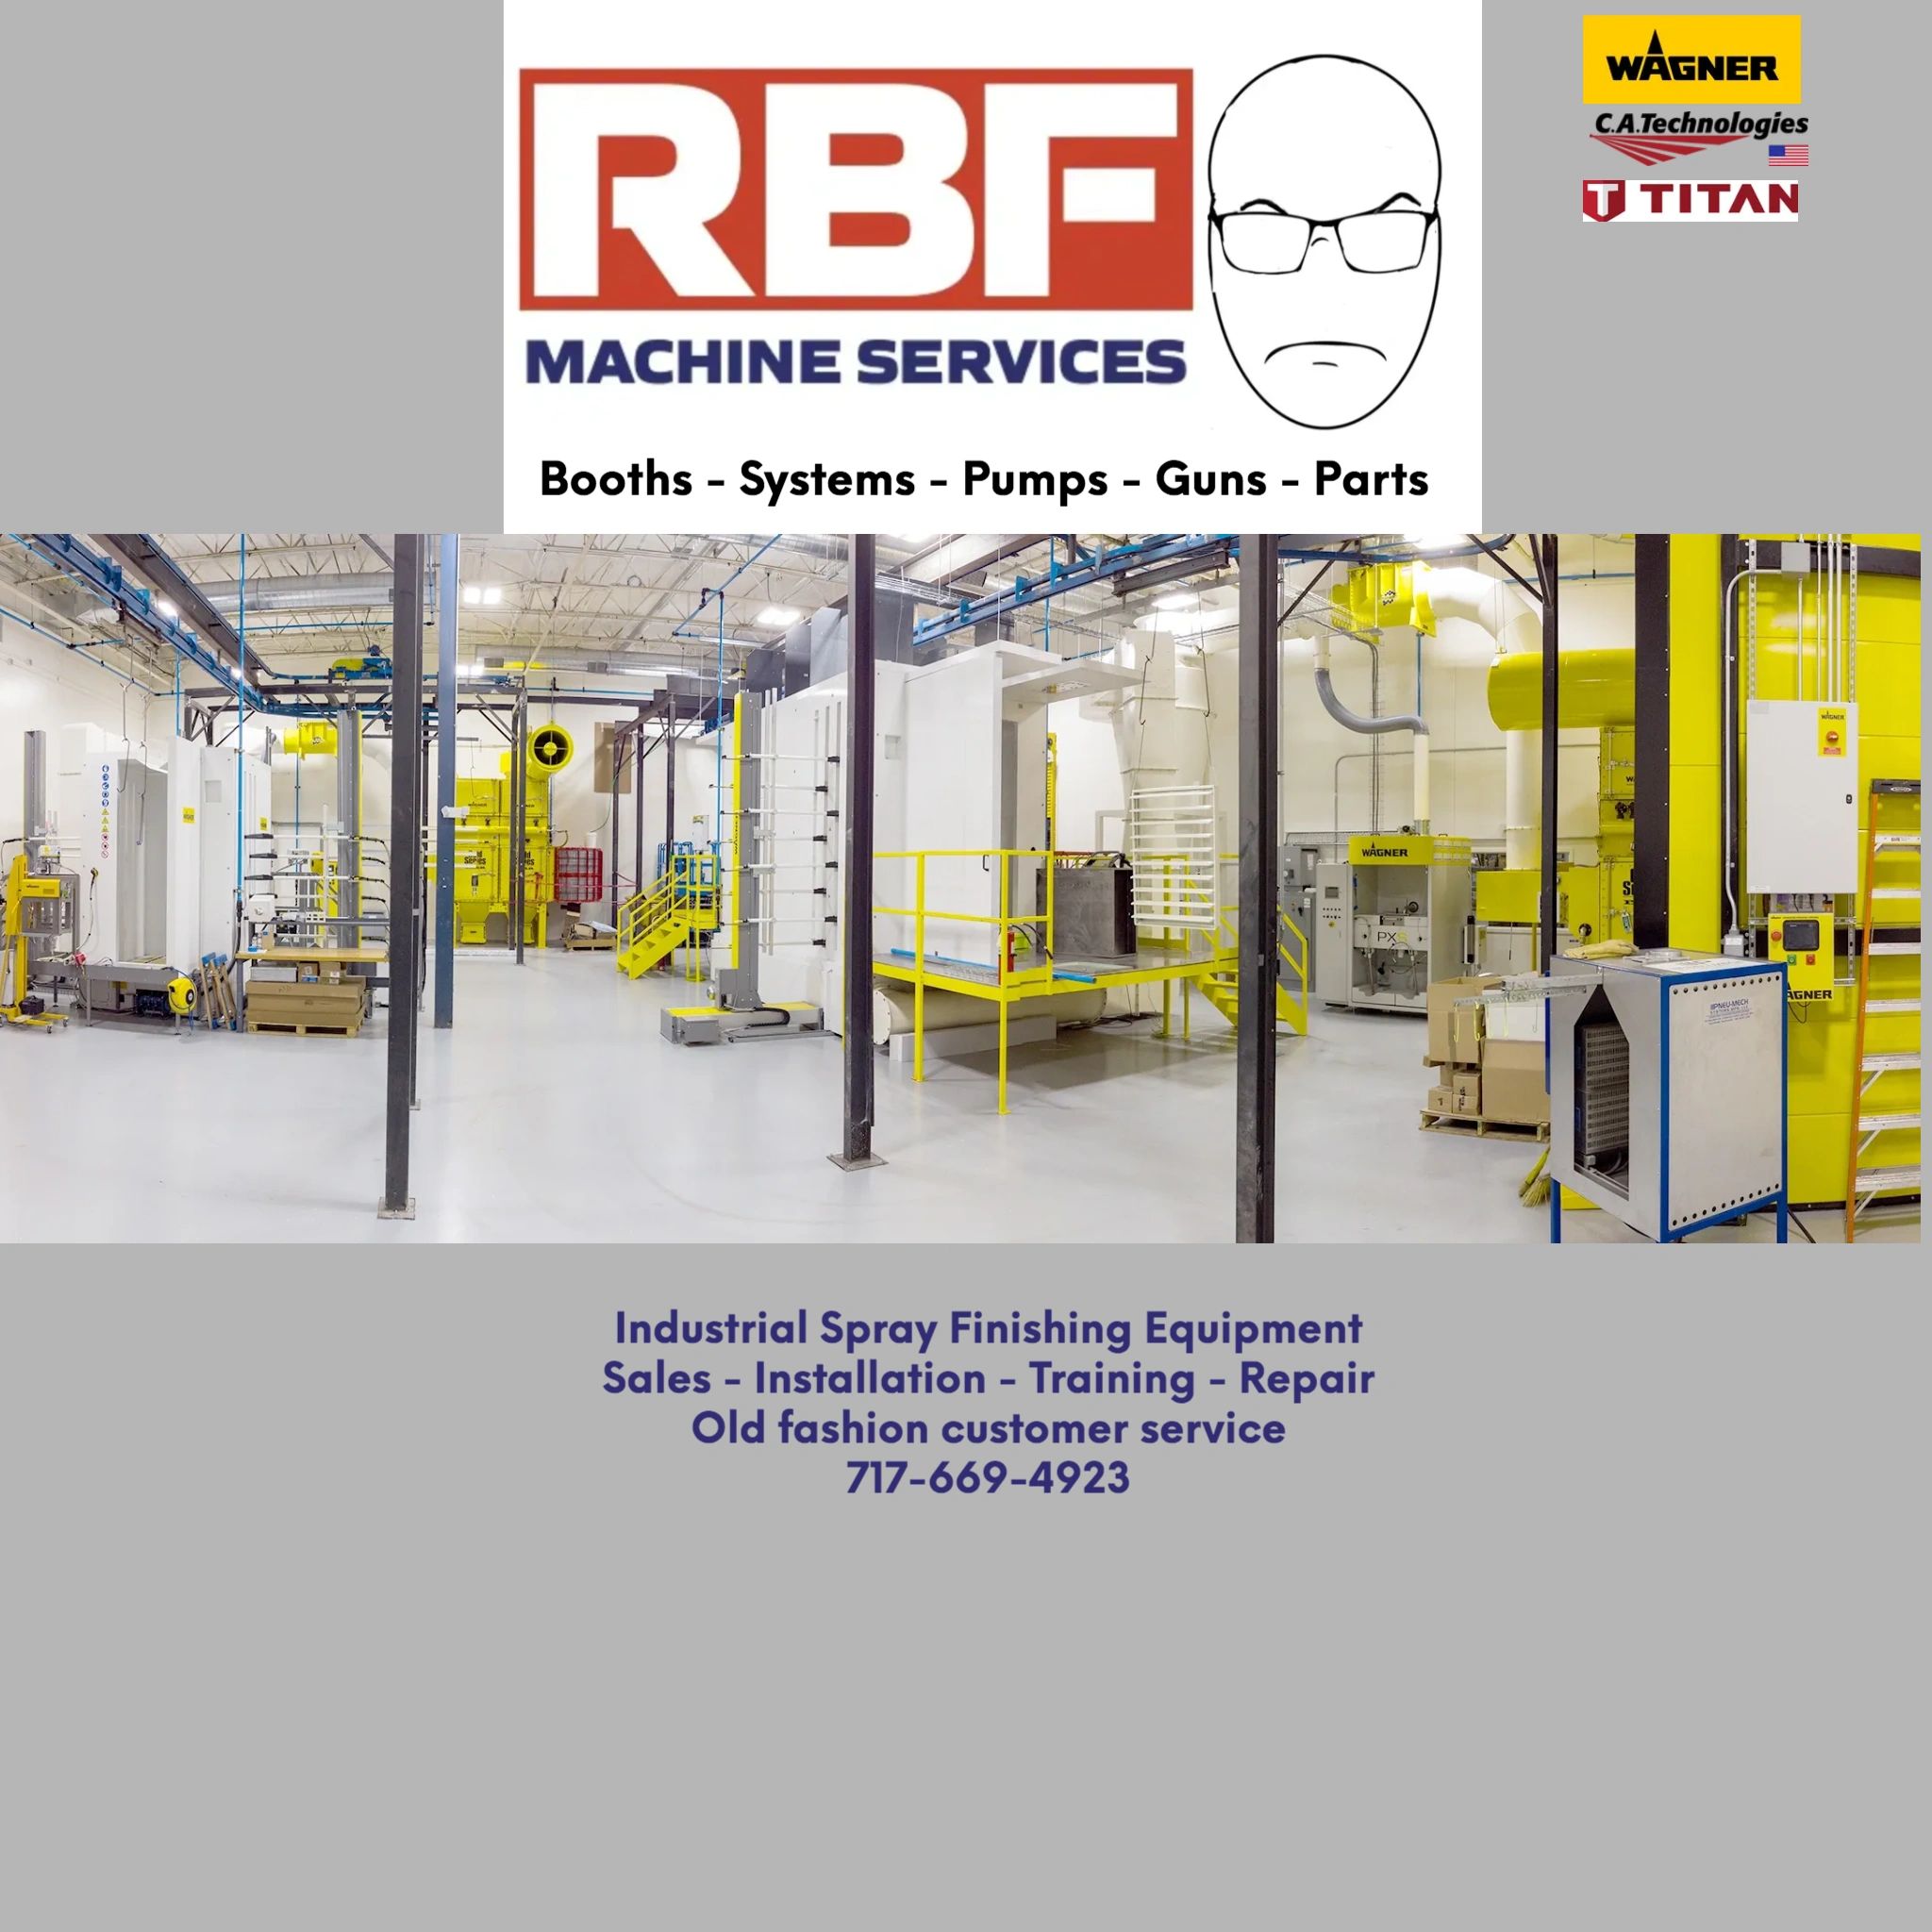 RBF Machine Services Inc